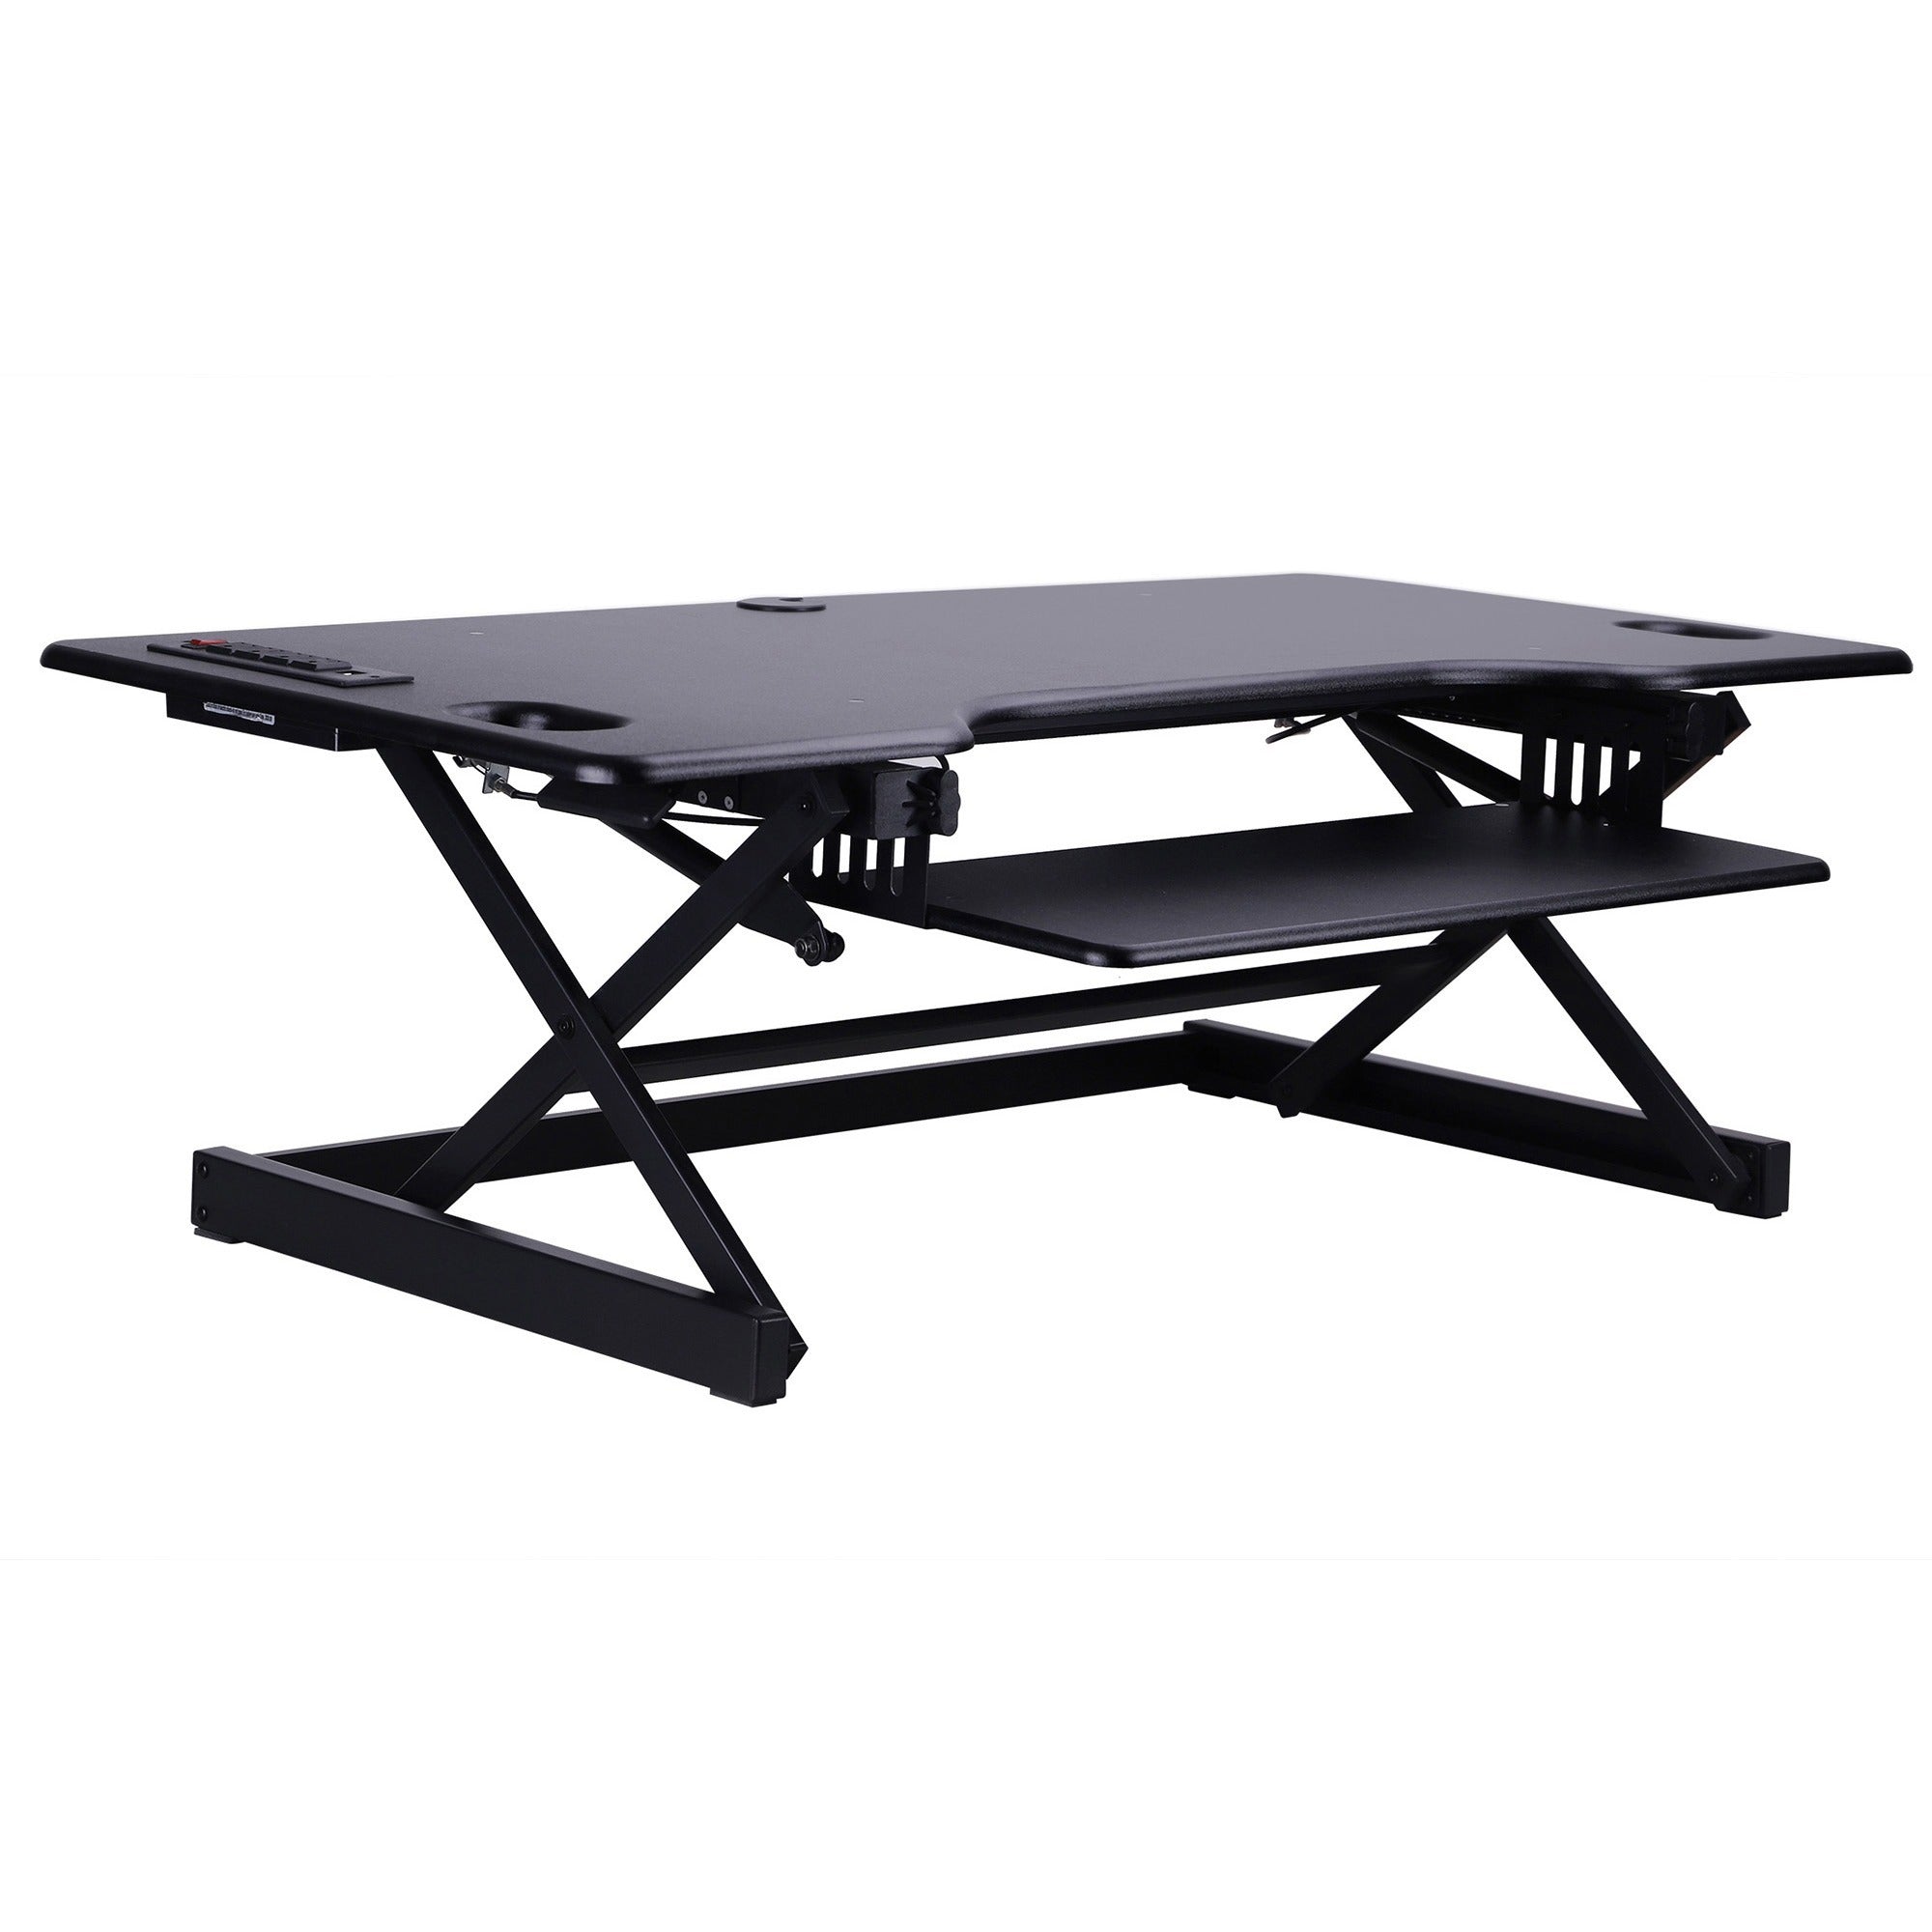 rocelco-sit-stand-desk-riser-45-lb-load-capacity-20-height-x-458-width-x-238-depth-black_rclrdadrb46a - 1